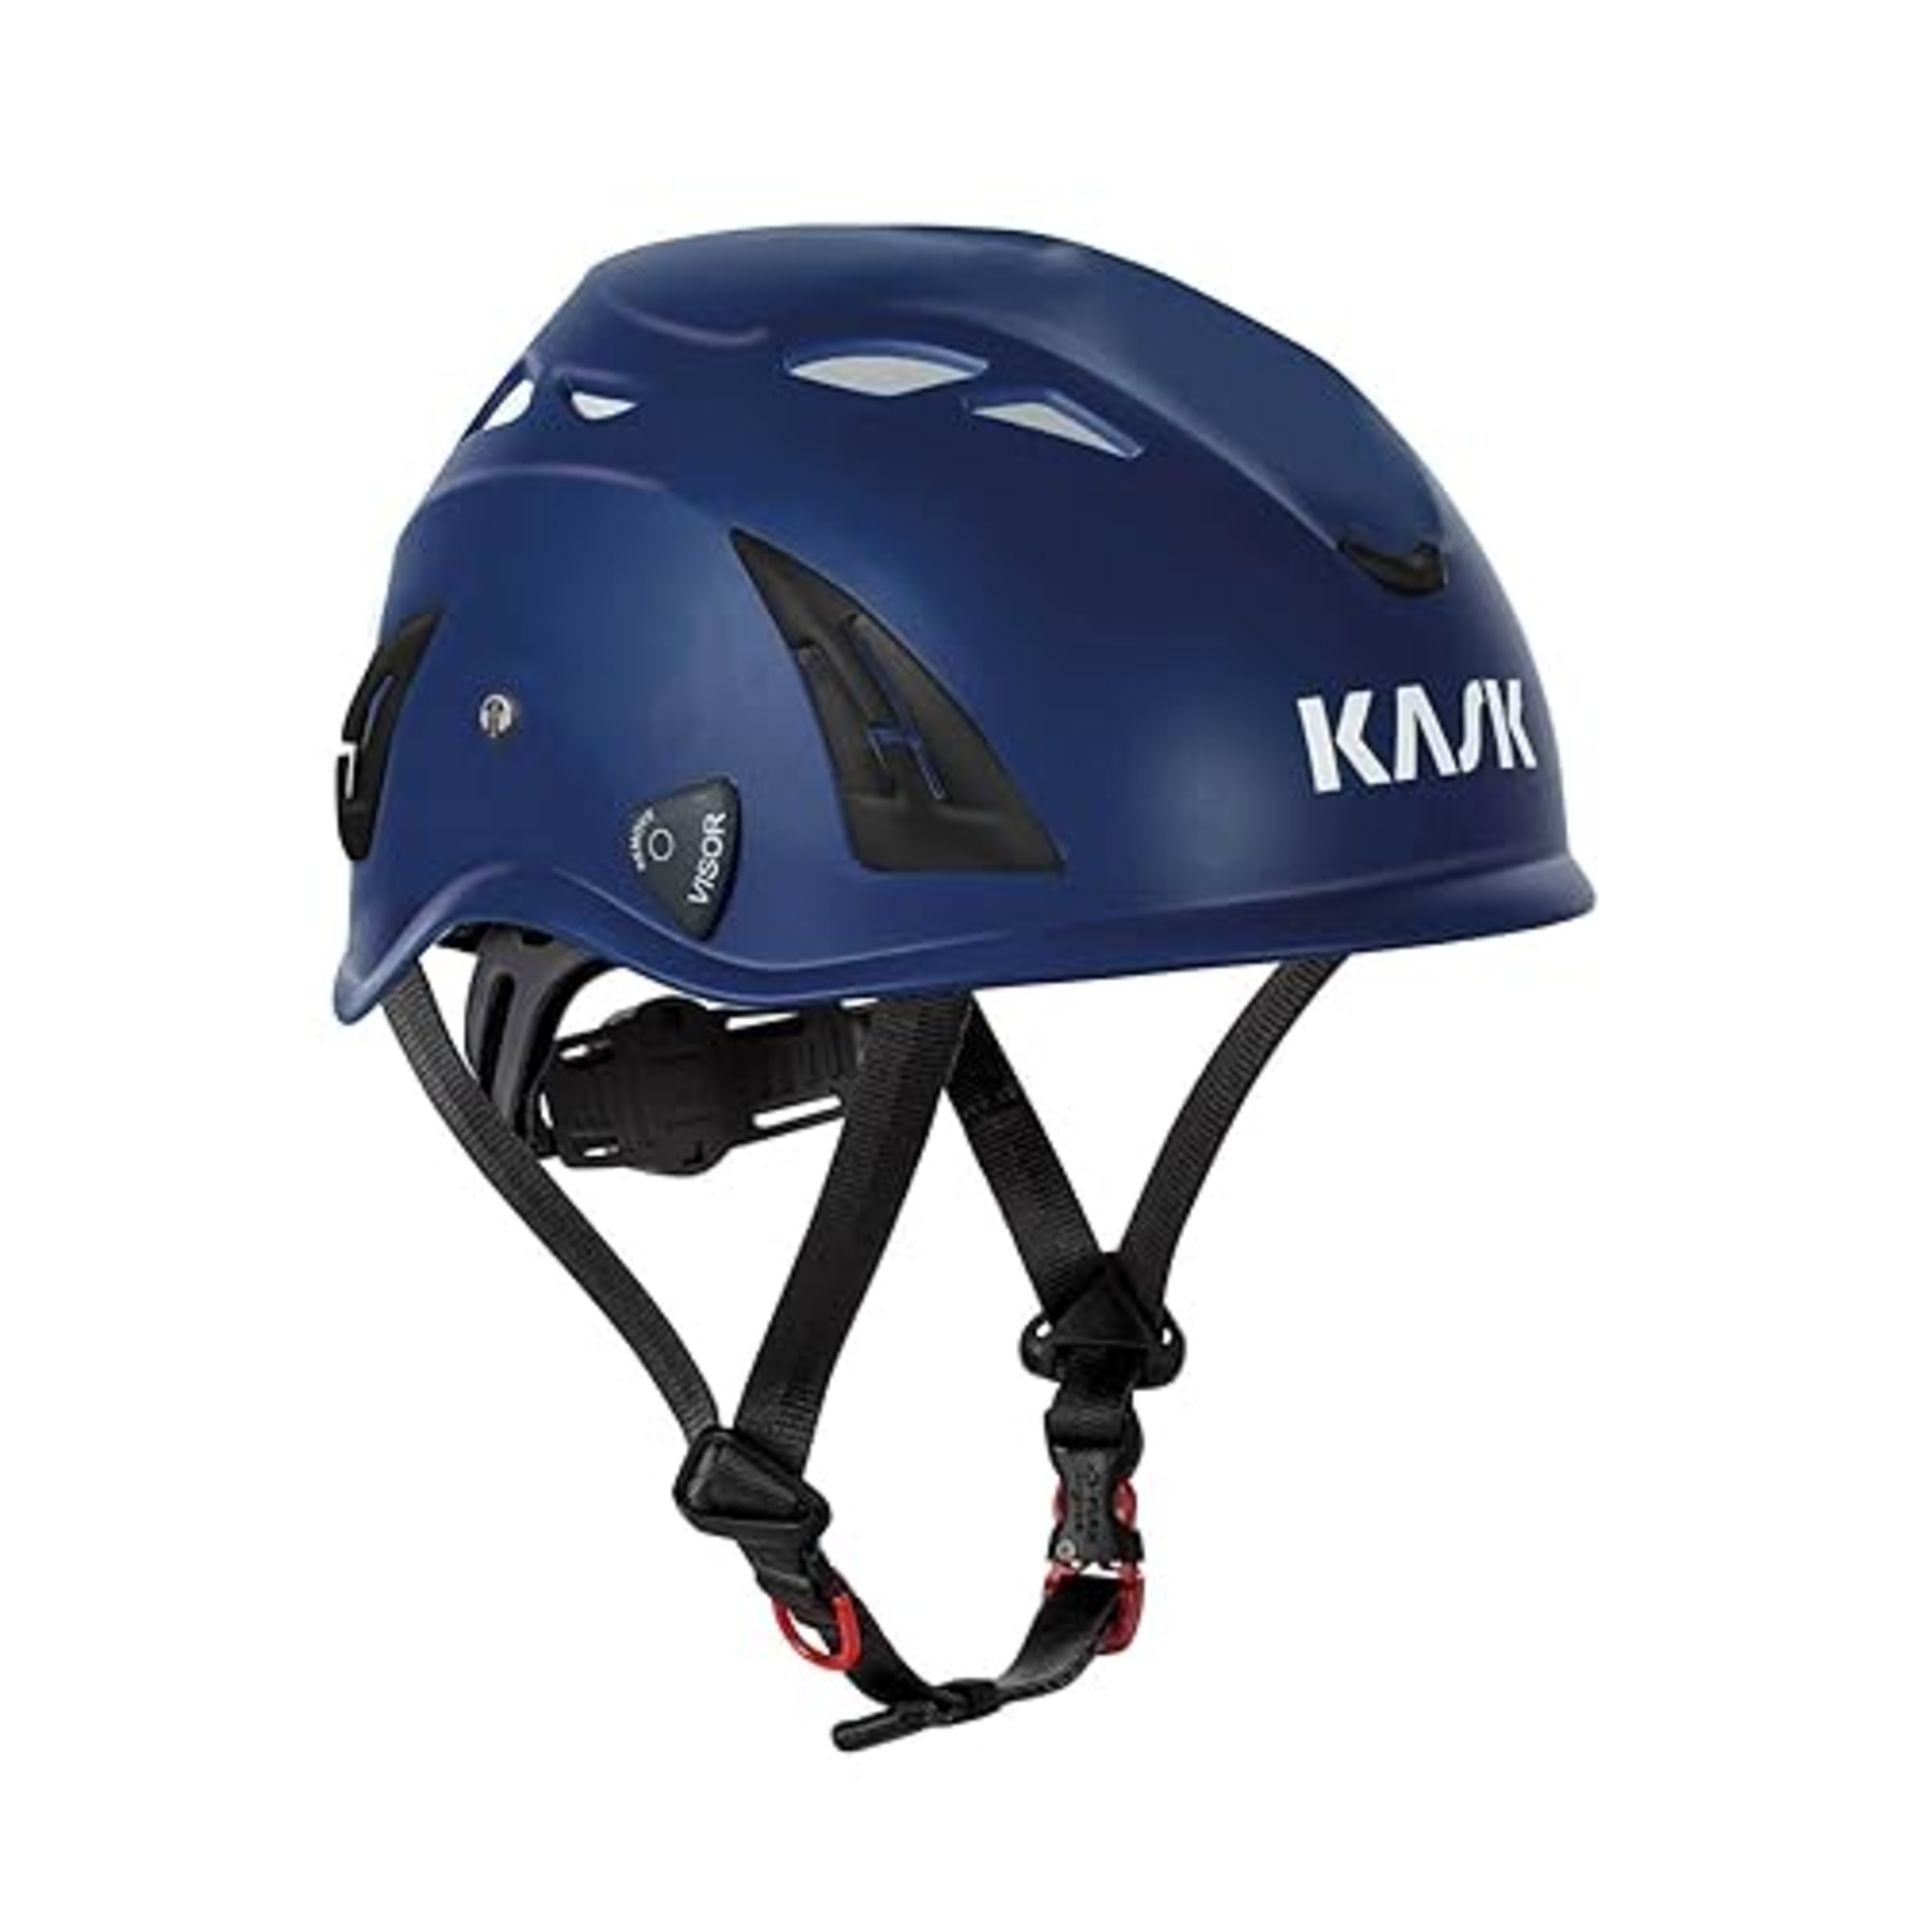 Kask WHE00008-208 Size 51-63 cm "Plasma AQ" Helmet - Dark Blue